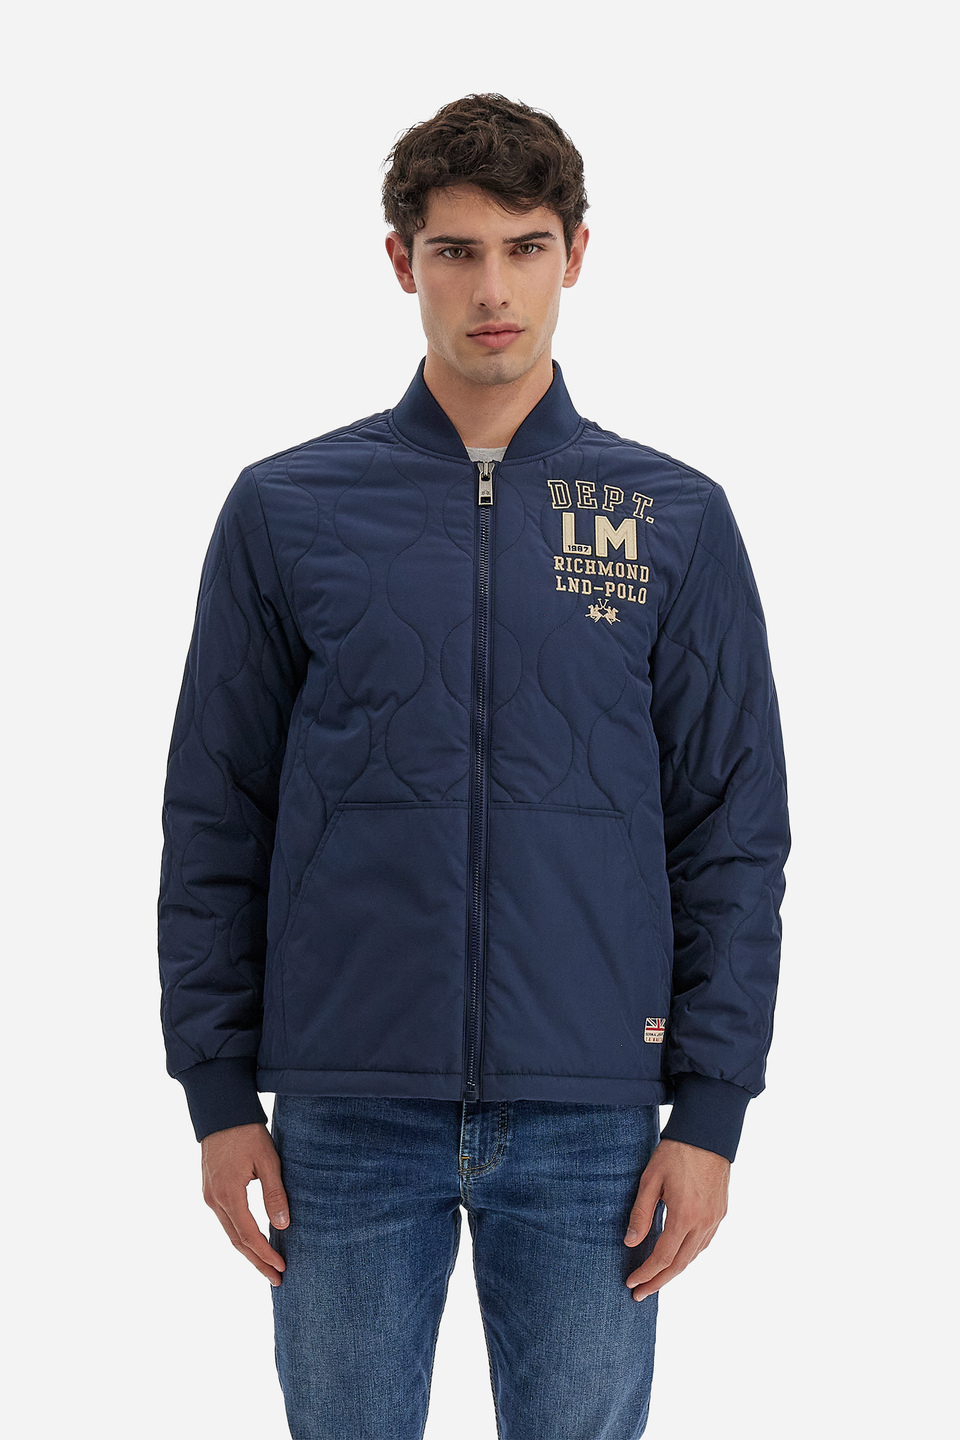 Polo Academy men's solid color high neck full zip jacket with hidden pockets - Vanni | La Martina - Official Online Shop